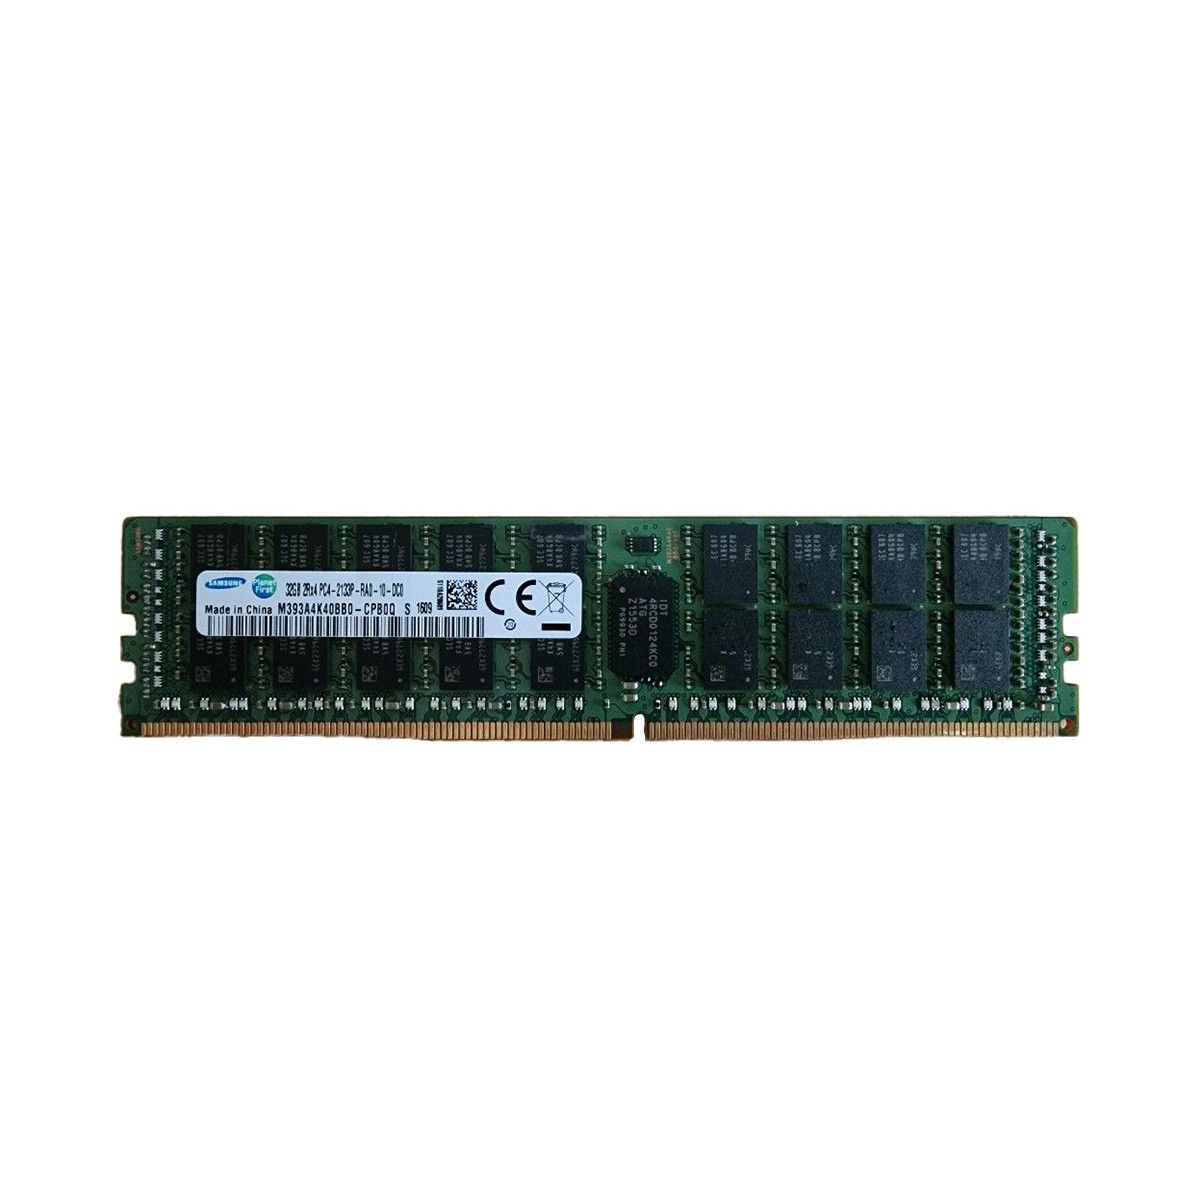 753222-B21-MS - Memstar 1x 32GB DDR4-2133 RDIMM PC4-17000P-R - Memorie OEM compatibilă Mem-Star 1 - Memstar 